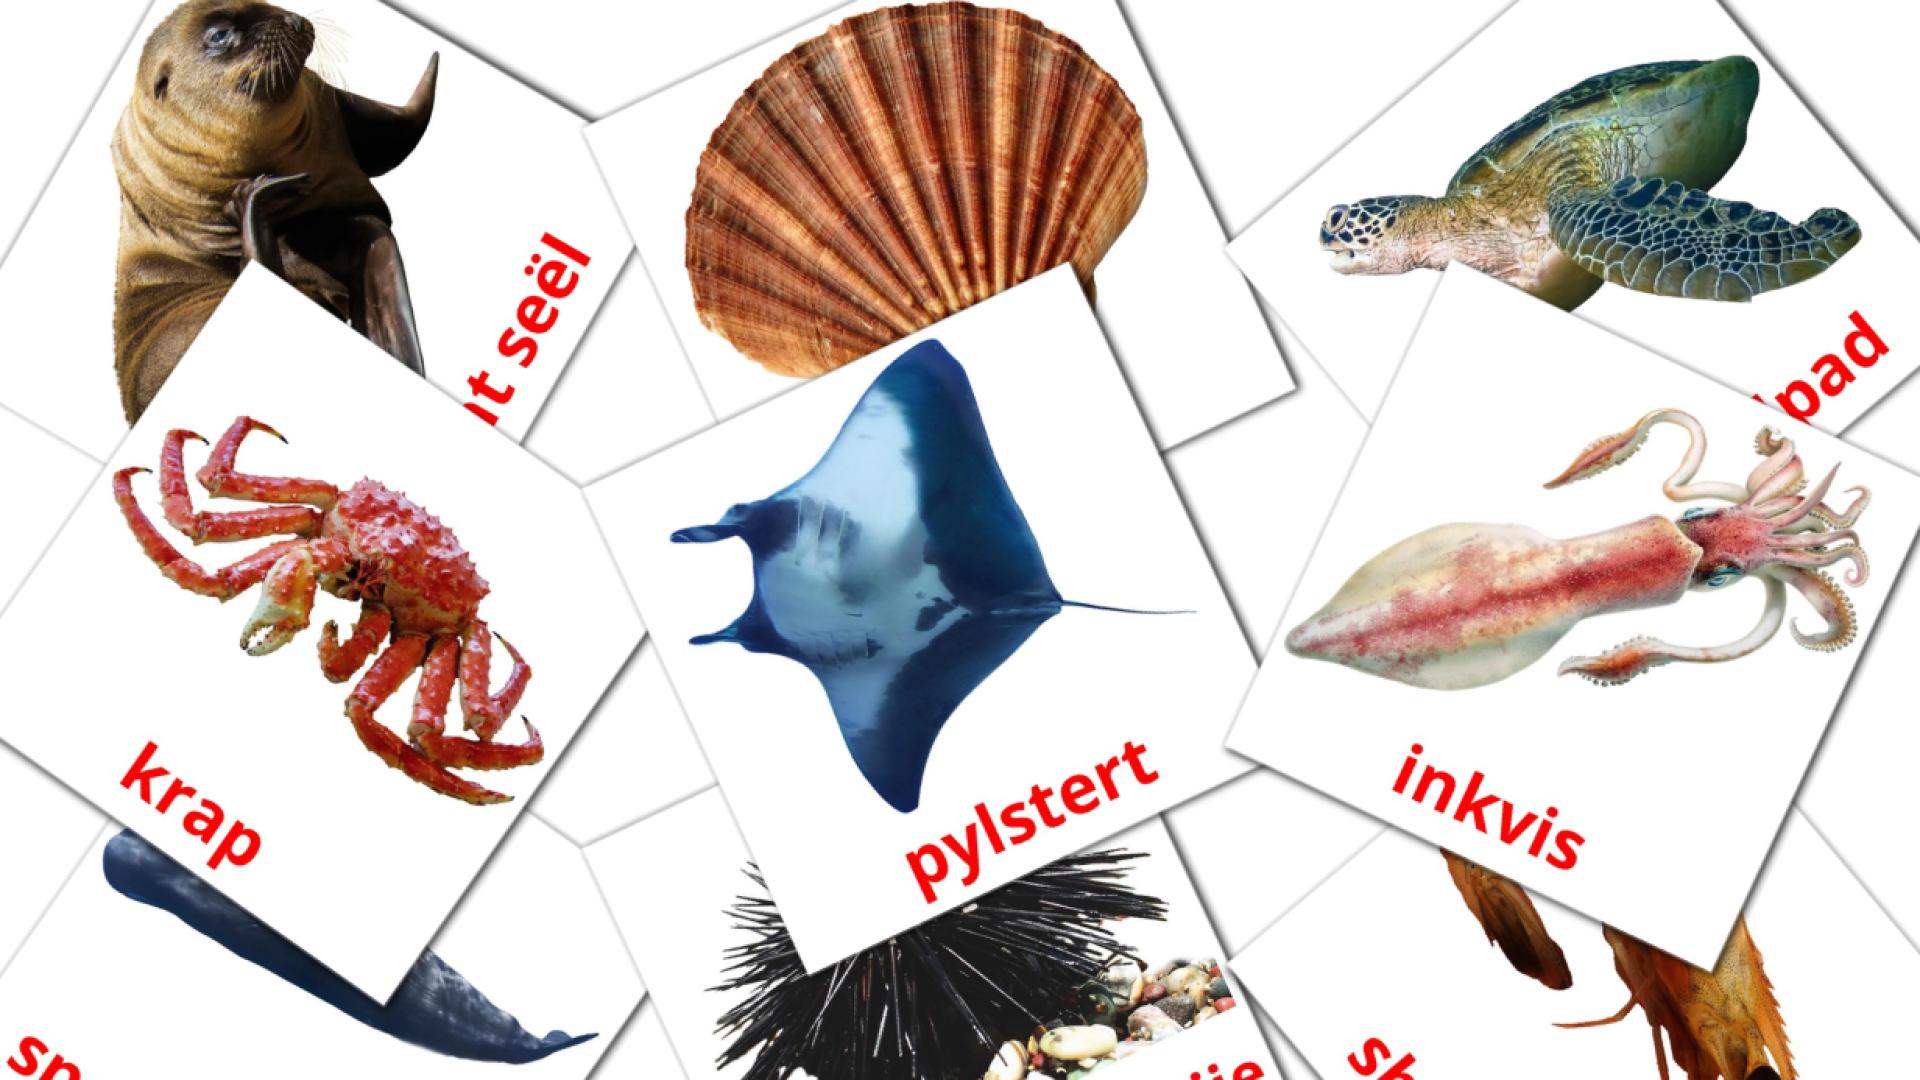 Sea animals - afrikaans vocabulary cards